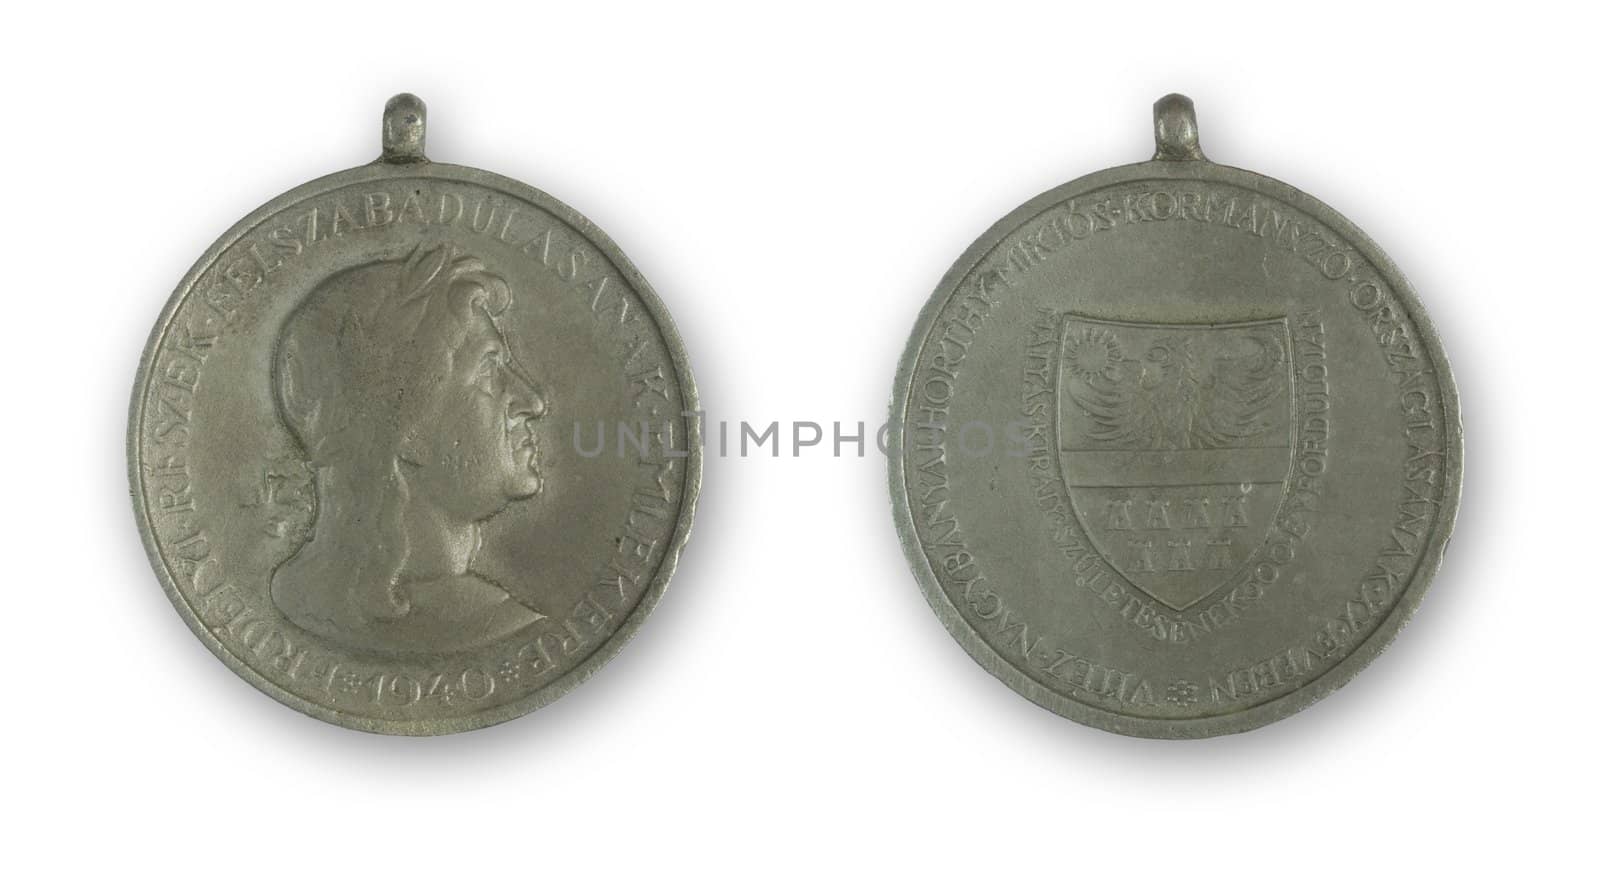 Hungarian ancient circular medal from 1940